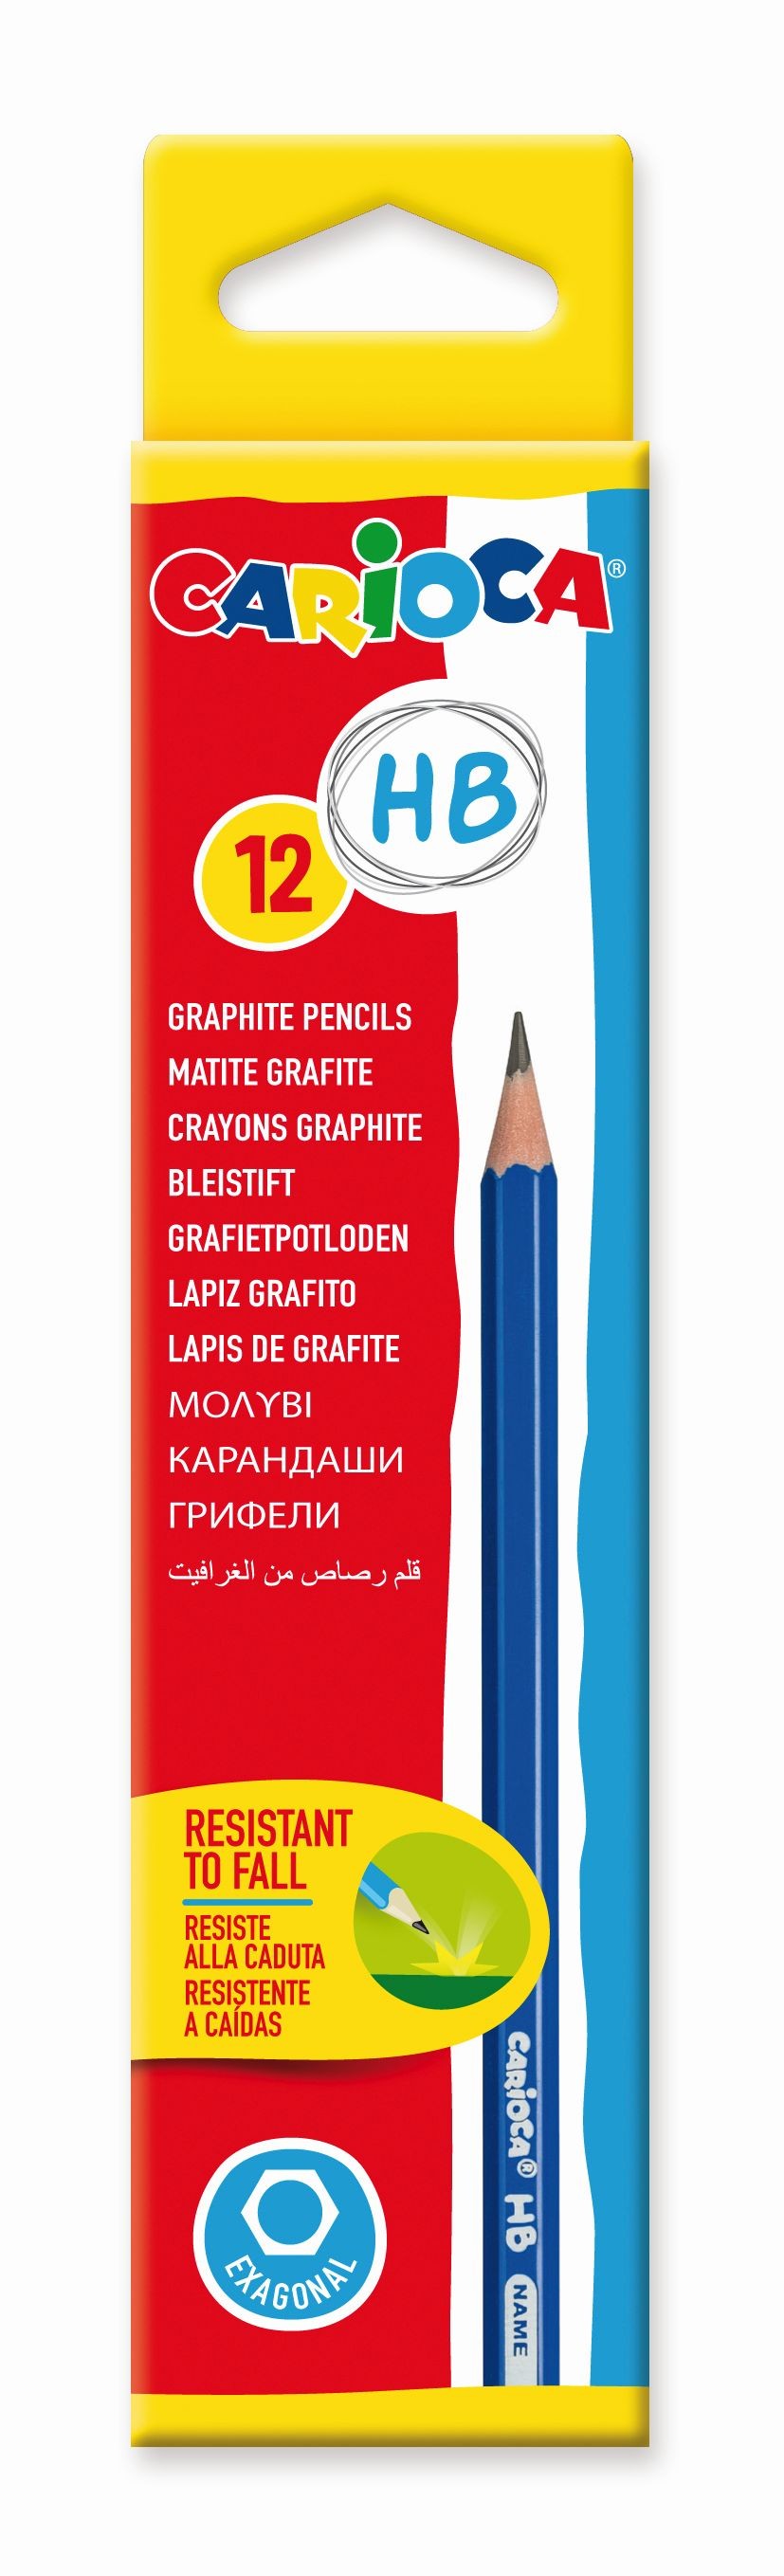 Creion CARIOCA, duritate HB, 12 bucati/set